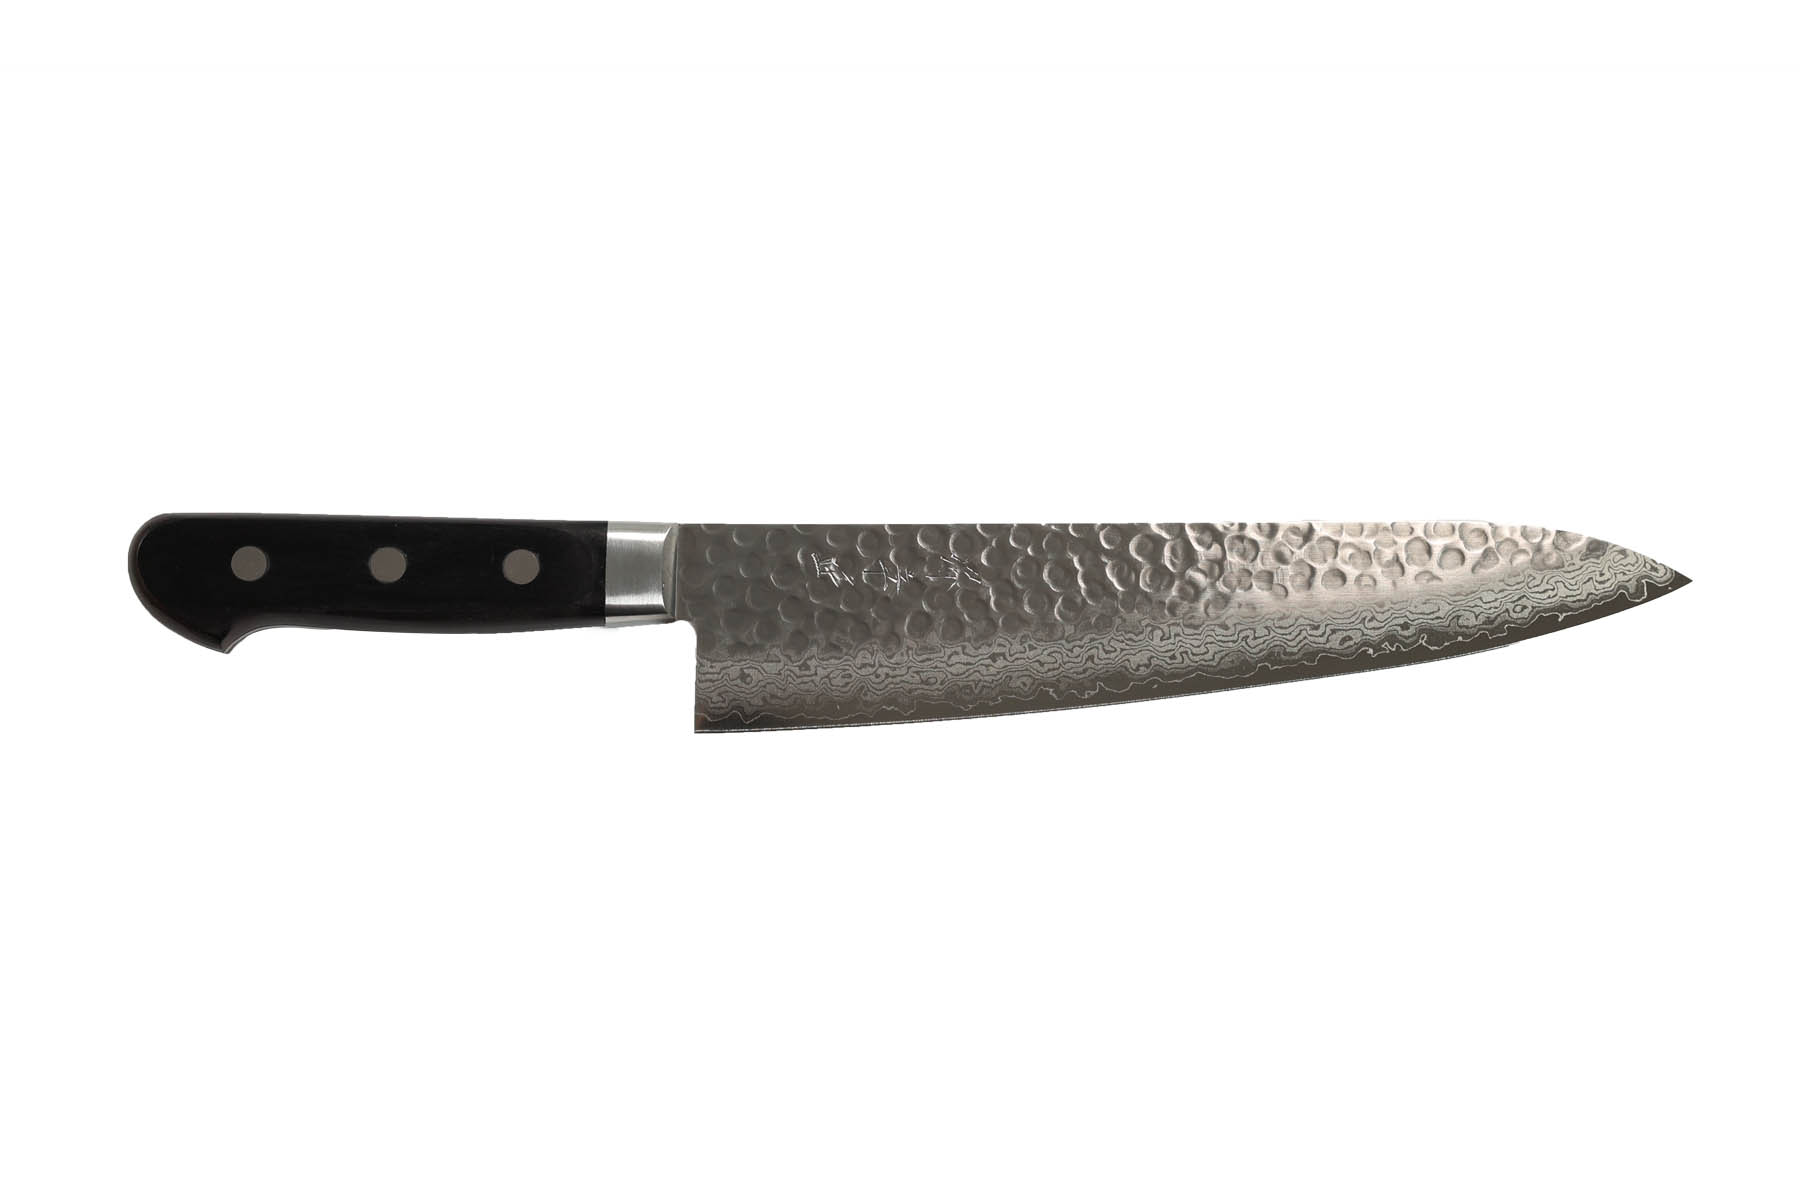 Couteau japonais artisanal Musakichi VG10 Damas - Couteau Guyto 24 cm pakka wood noir